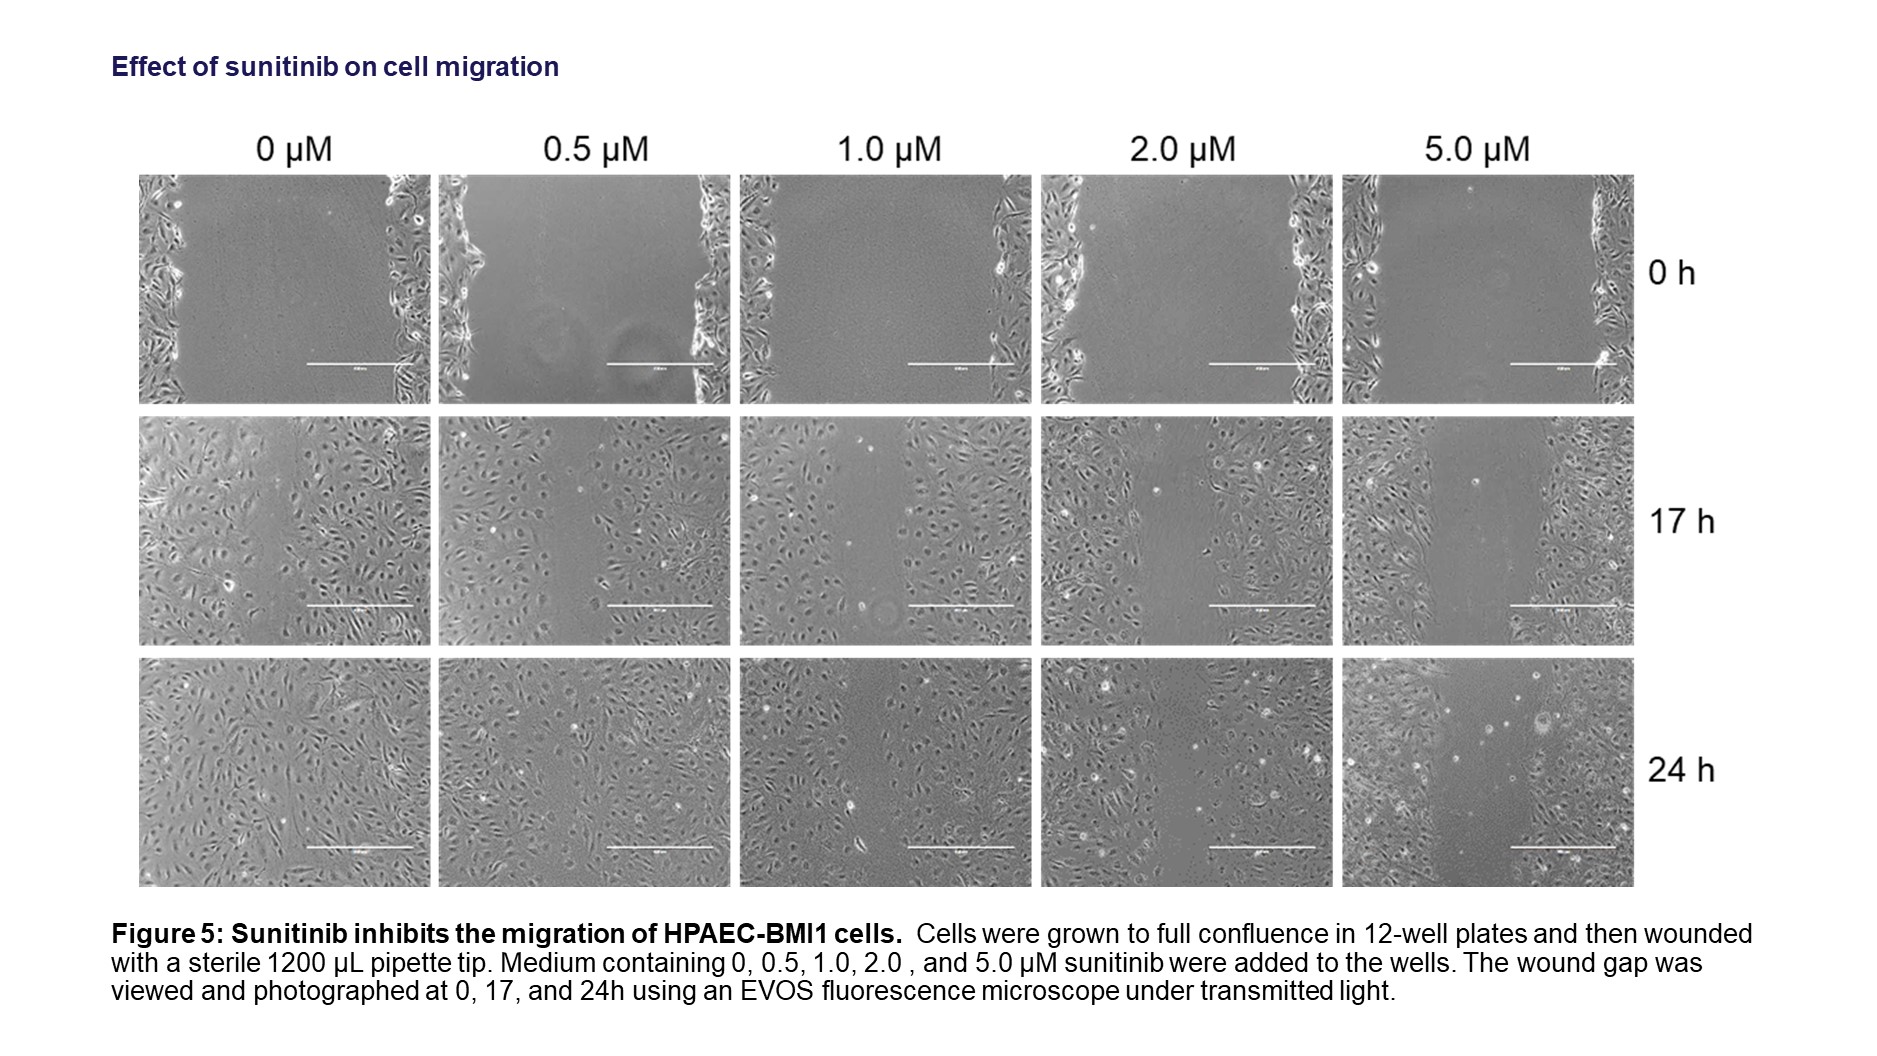 MIgration studies of HPAEC-BMI1 cells